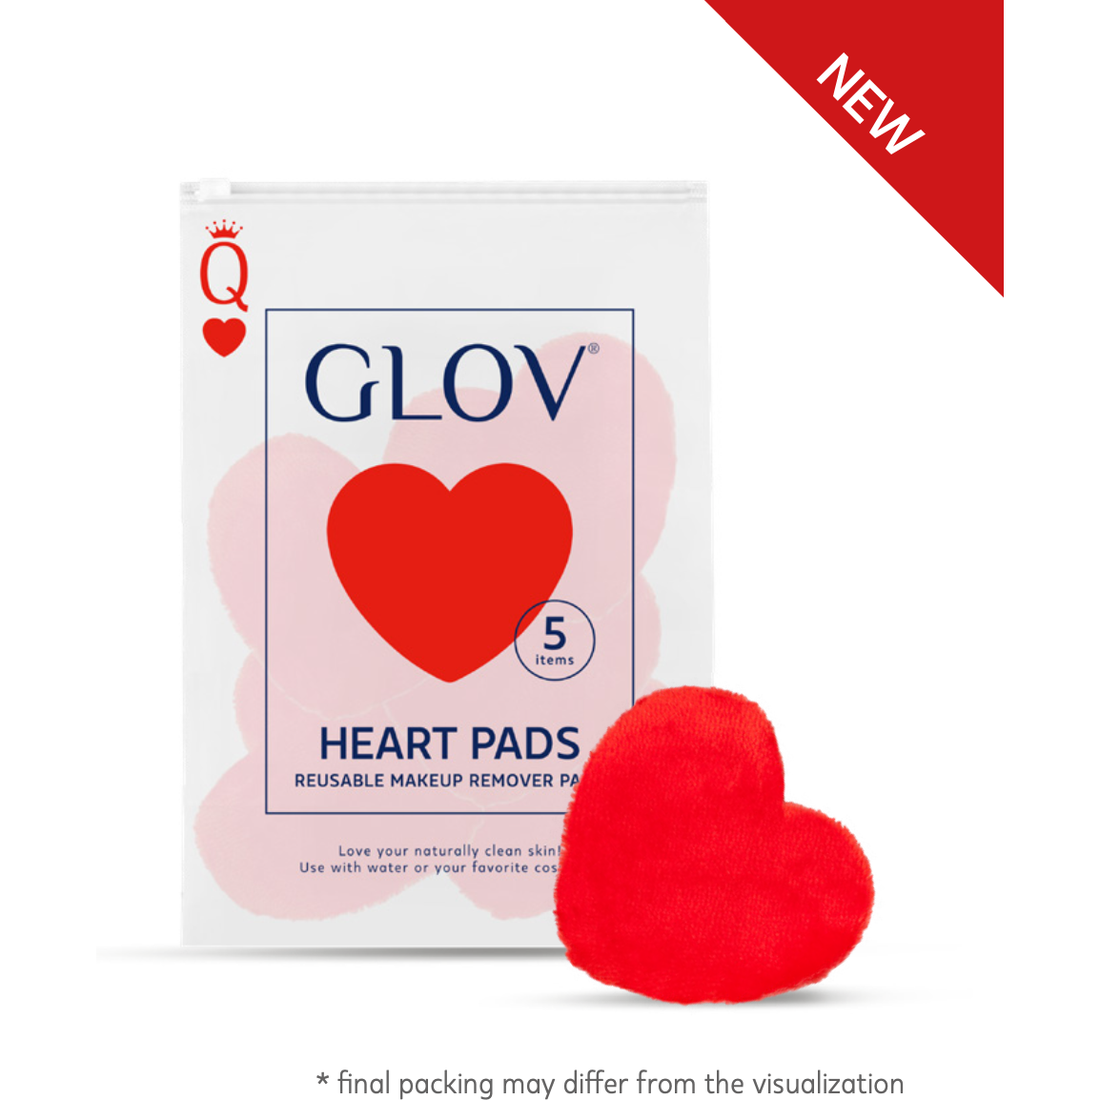 GLOV Heart Pads